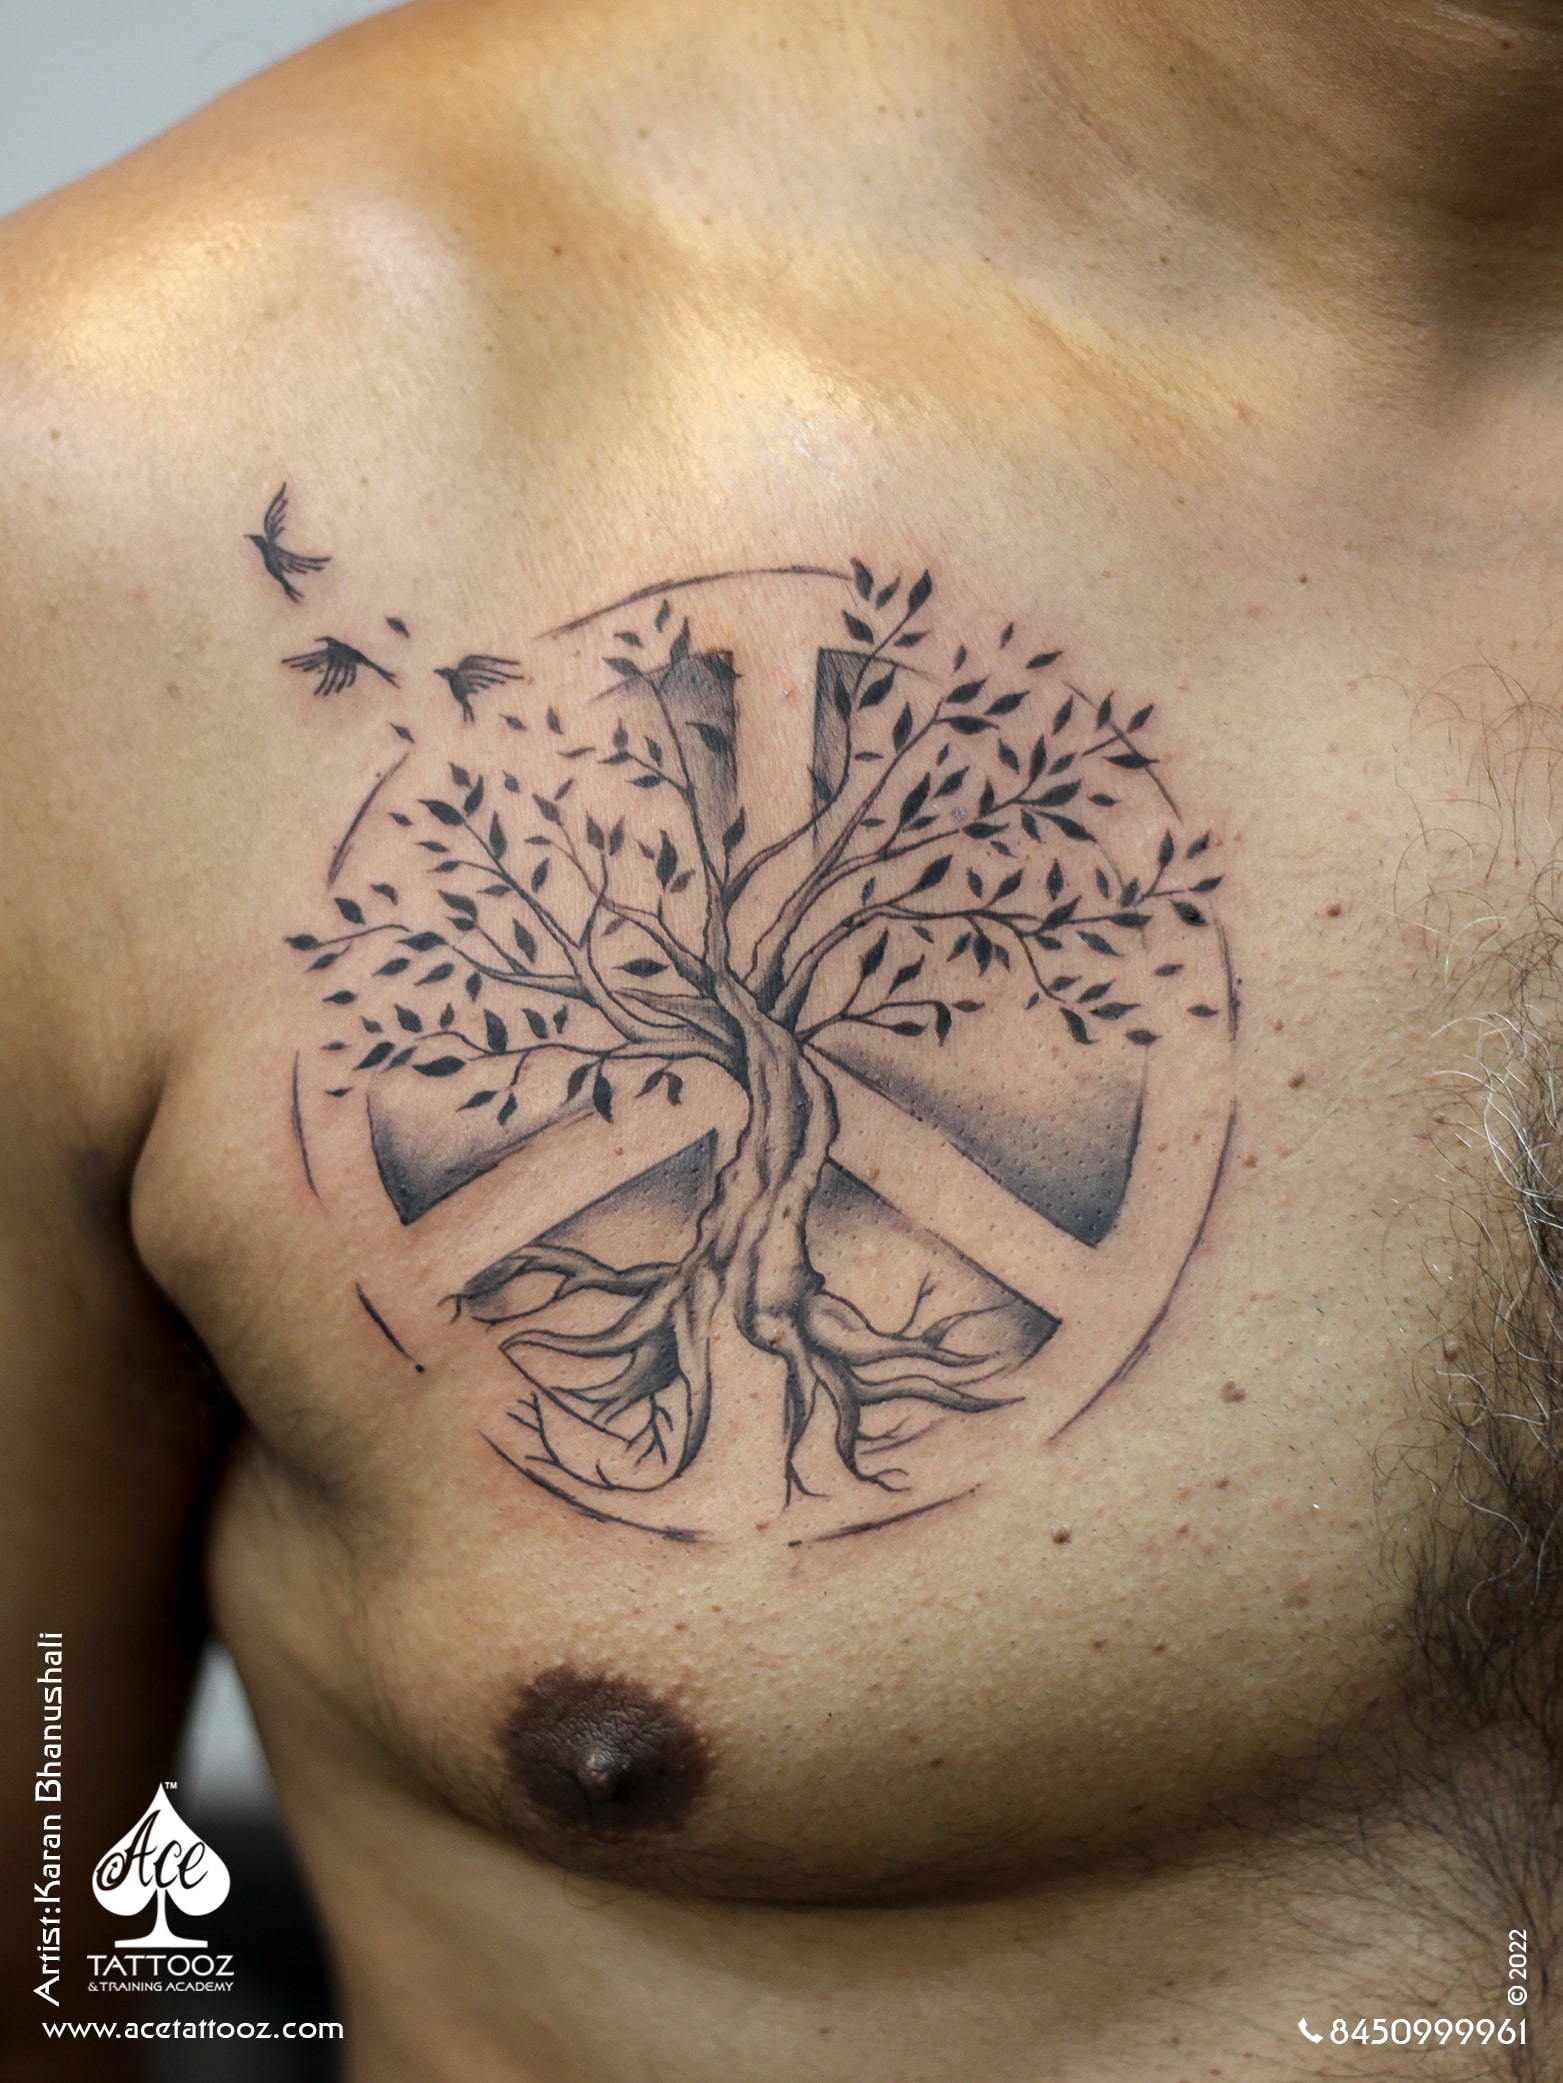 Tattoo uploaded by Houssam • Peace sign tattoo • Tattoodo